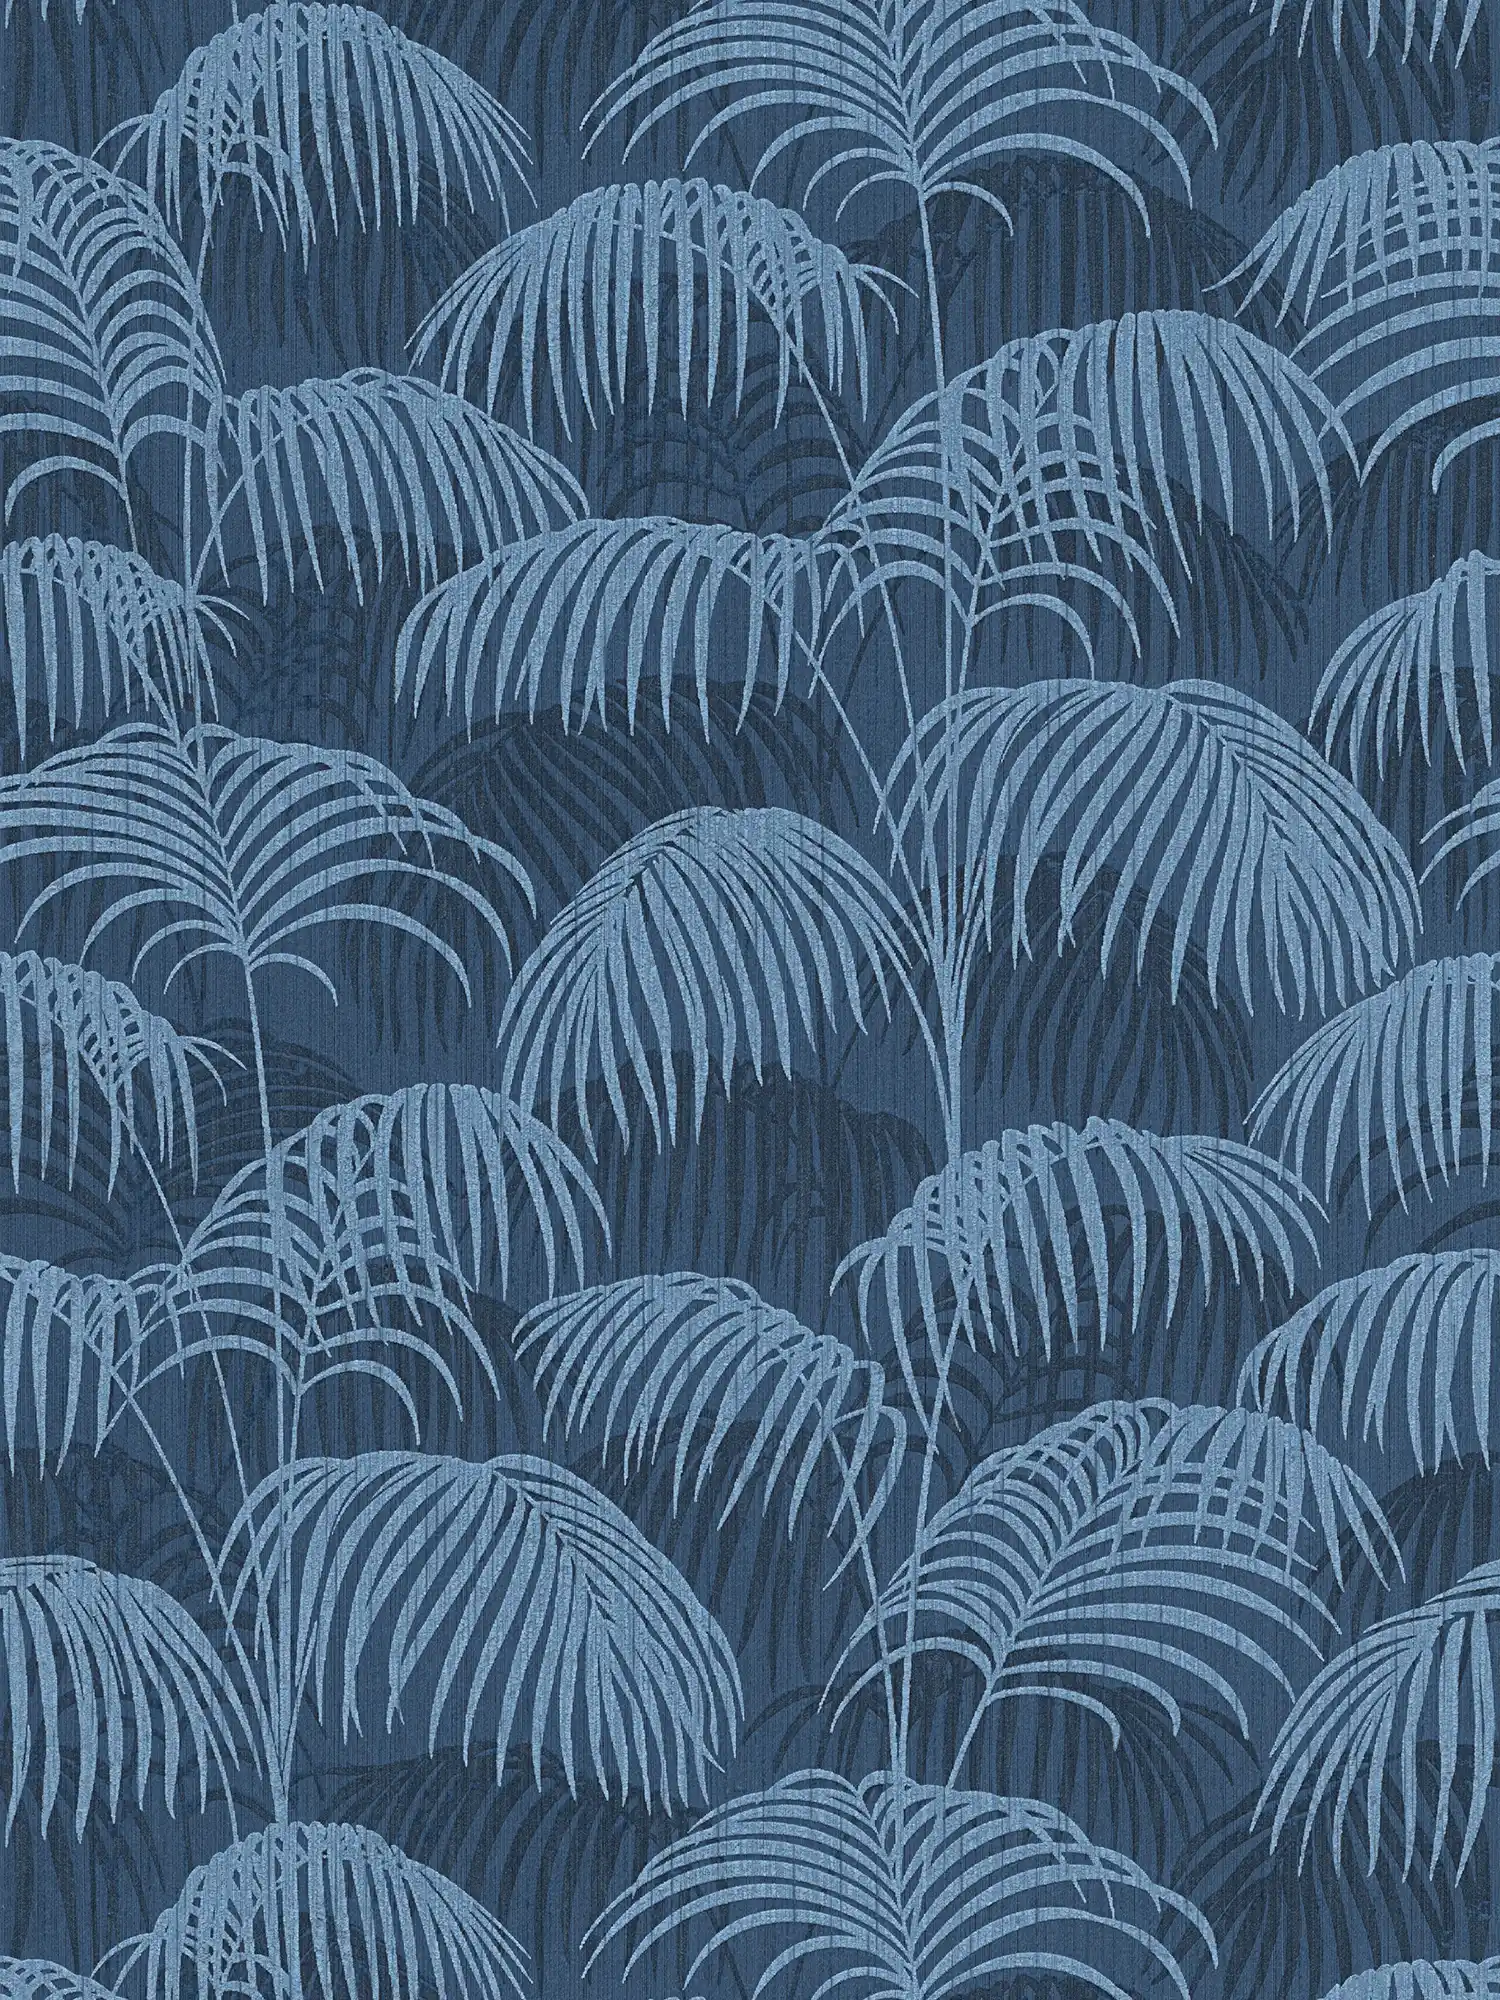 Tapete Dschungel Blätter Muster Kolonial Stil – Blau
